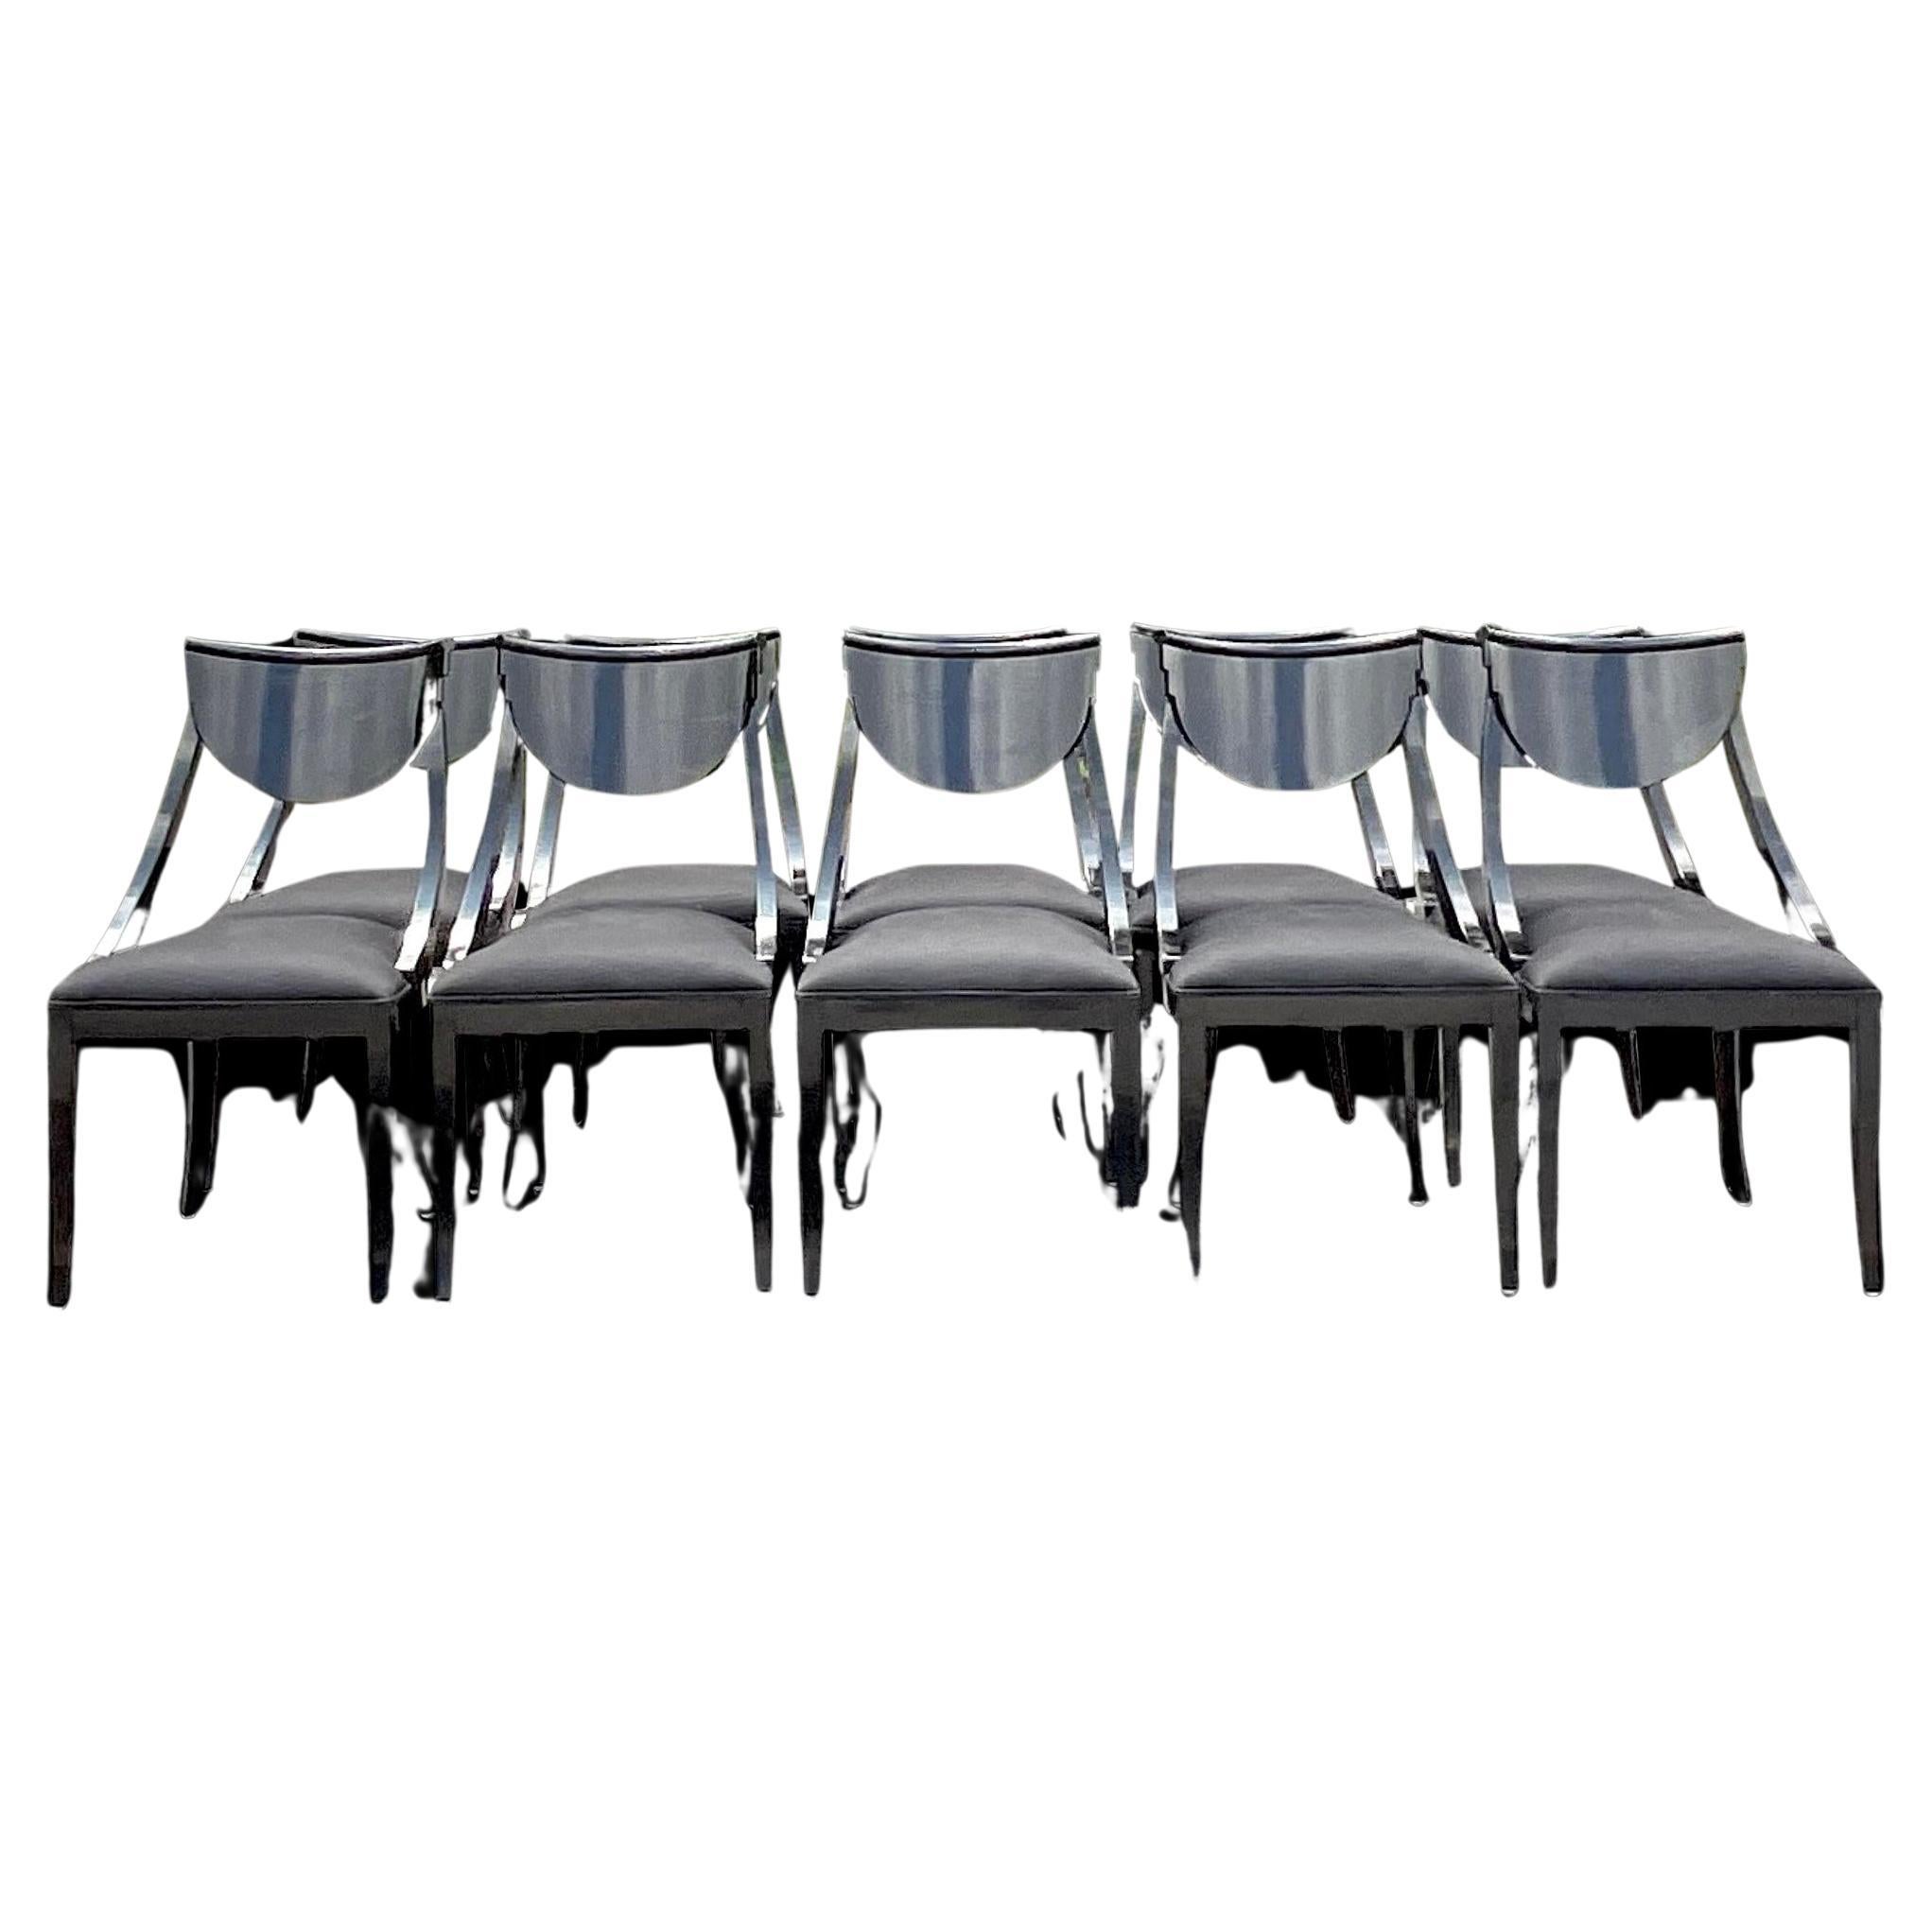 Vintage Italian Pietro Constantini Black Lacquered Kilsmos Chairs - Set of 10 For Sale